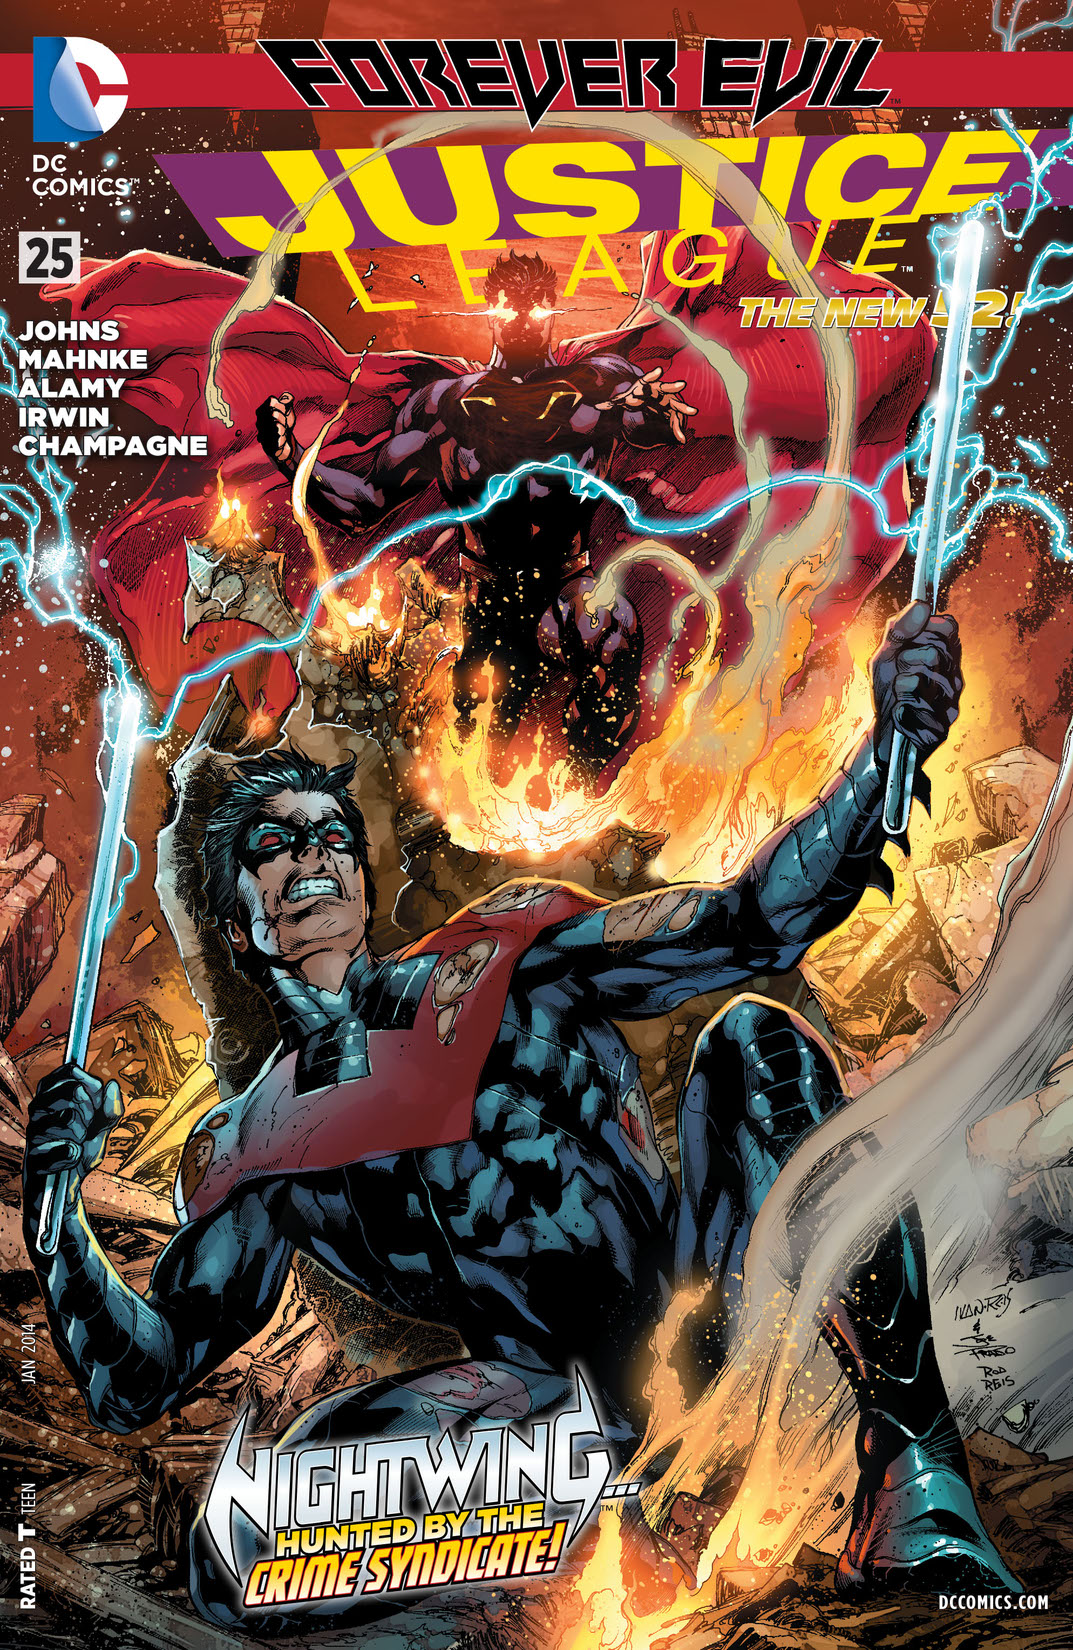 Justice League (2011-) #25 preview images